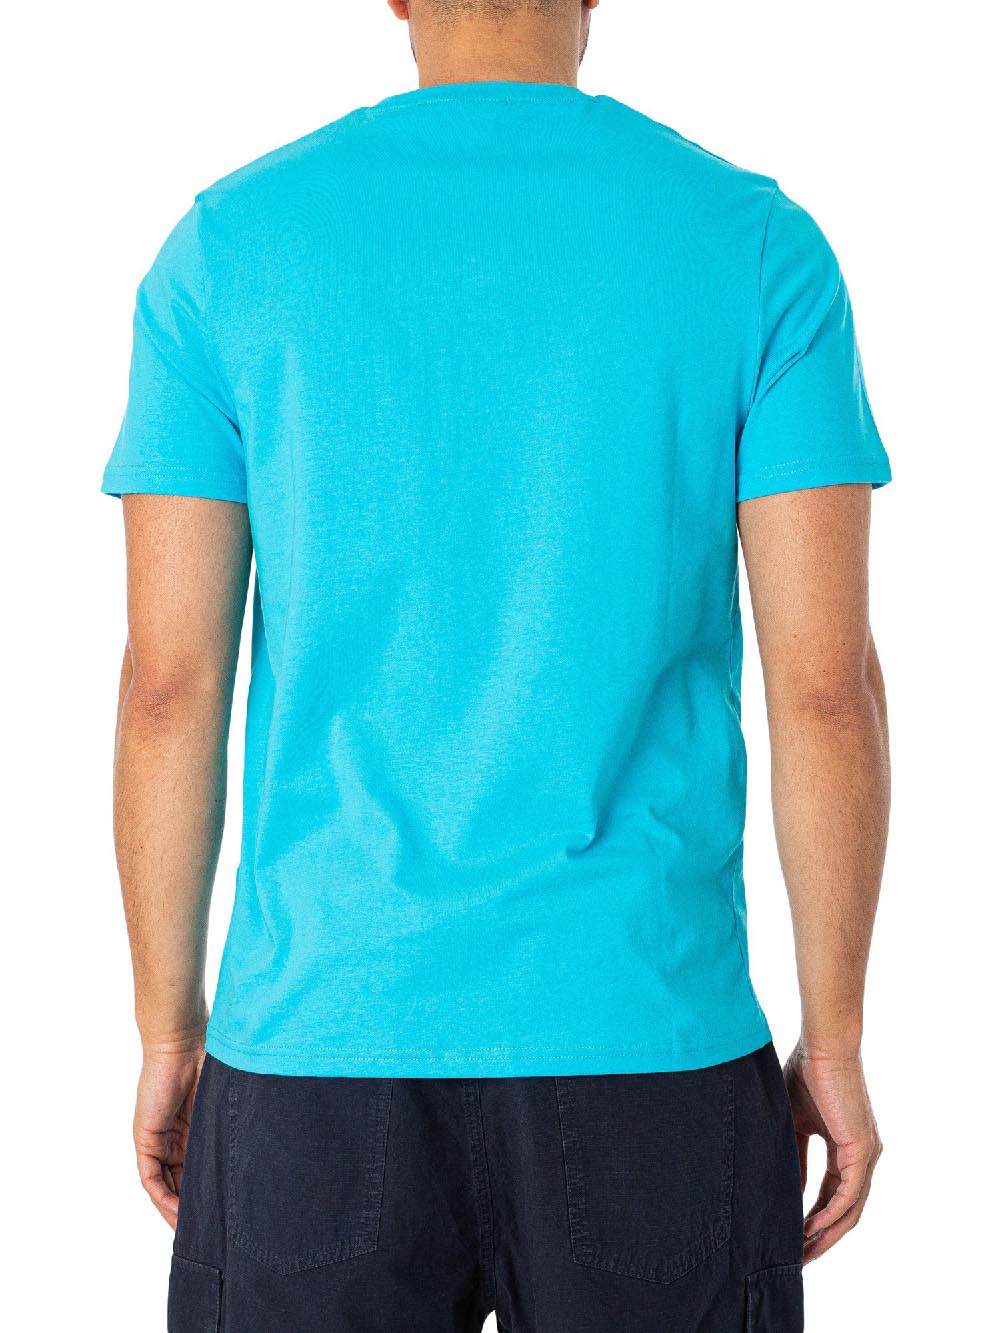 LYLE & SCOTT T-shirt Uomo Turchese